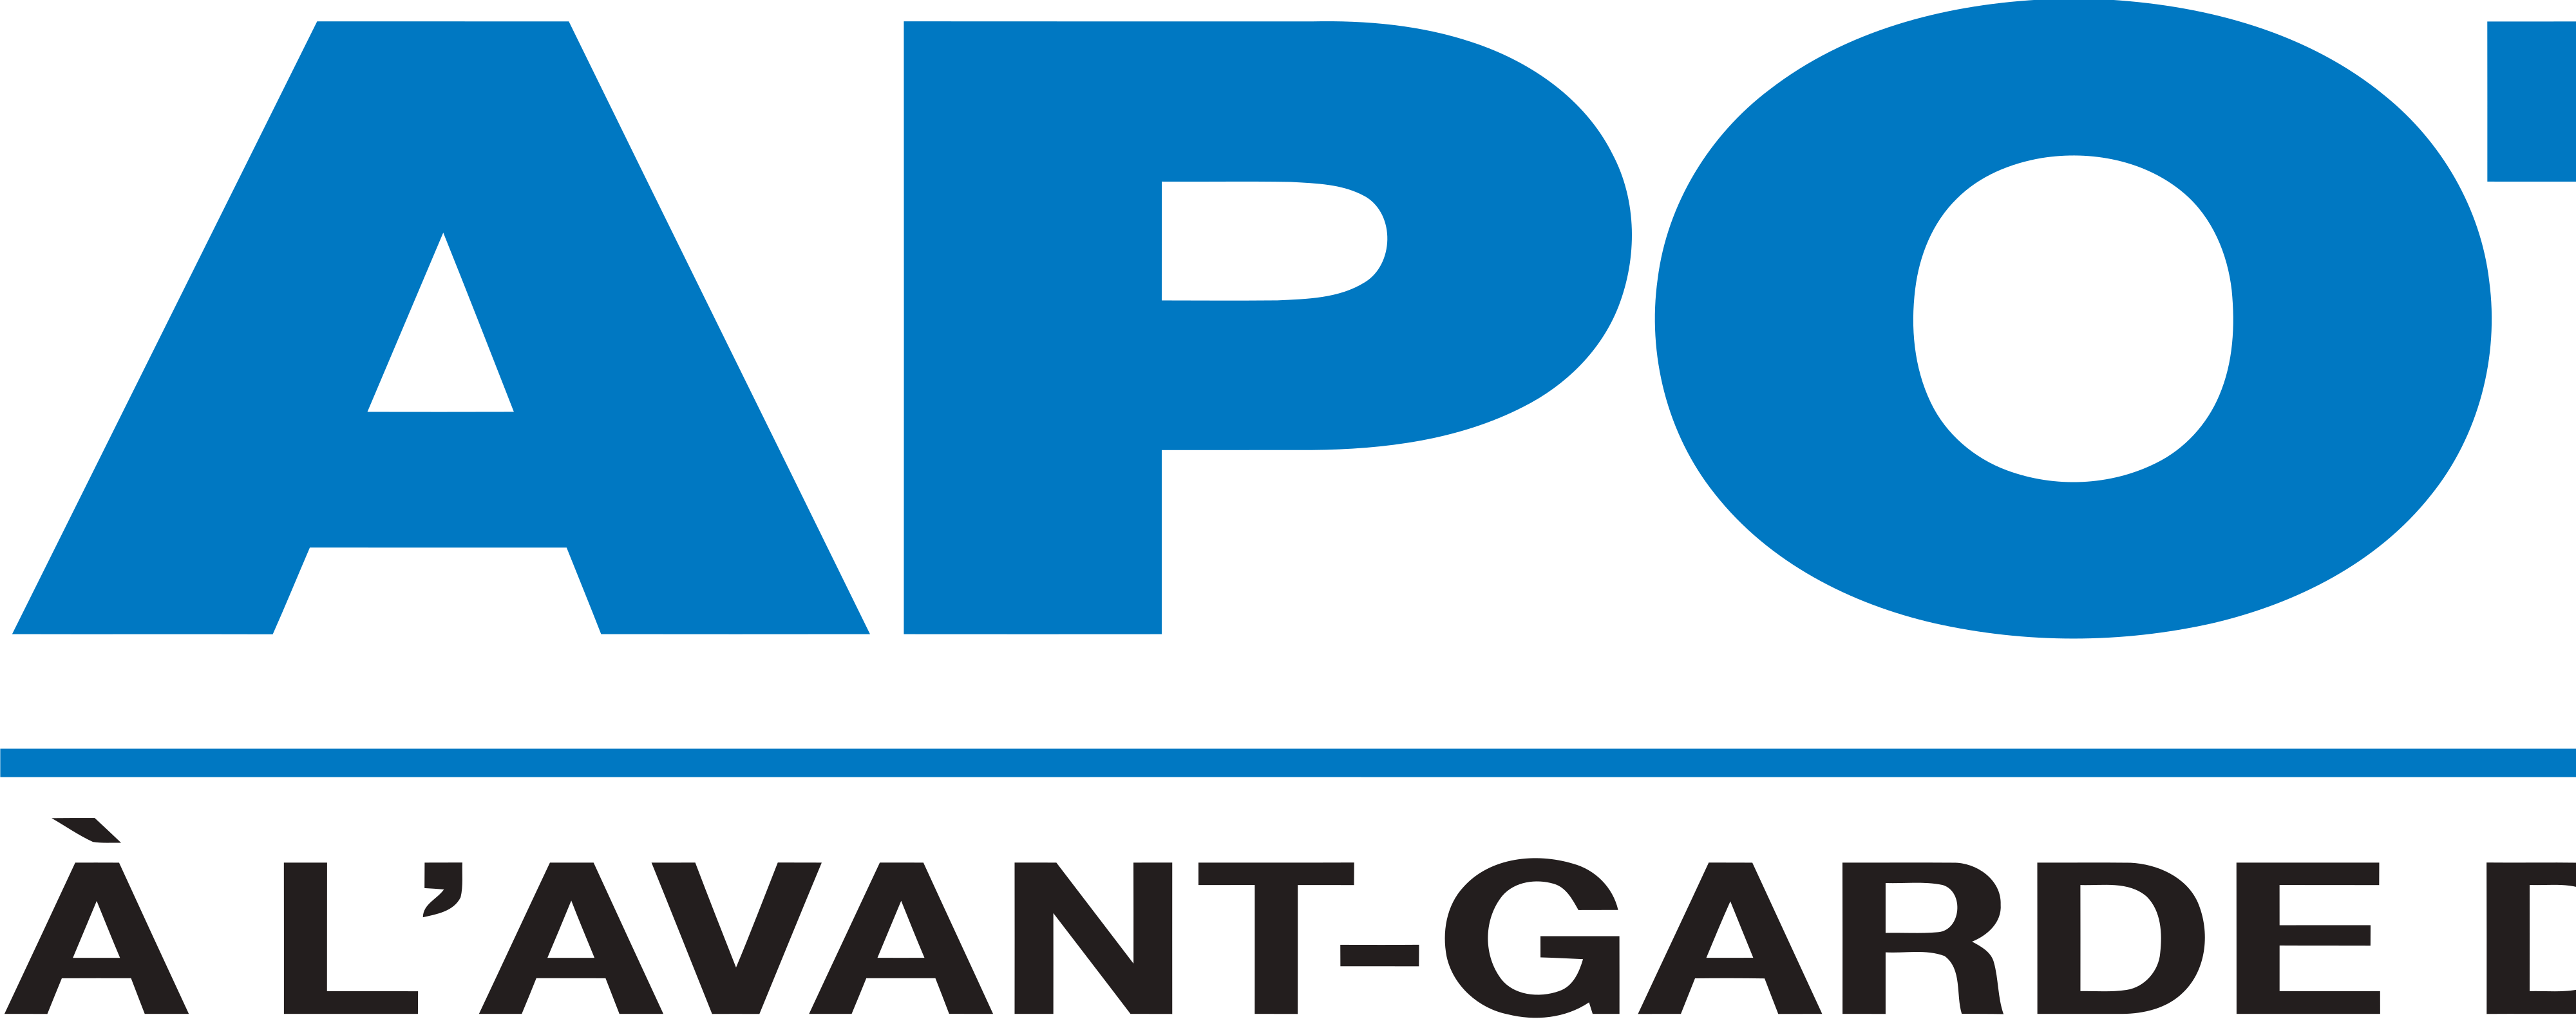 Apotex Inc logo - download.